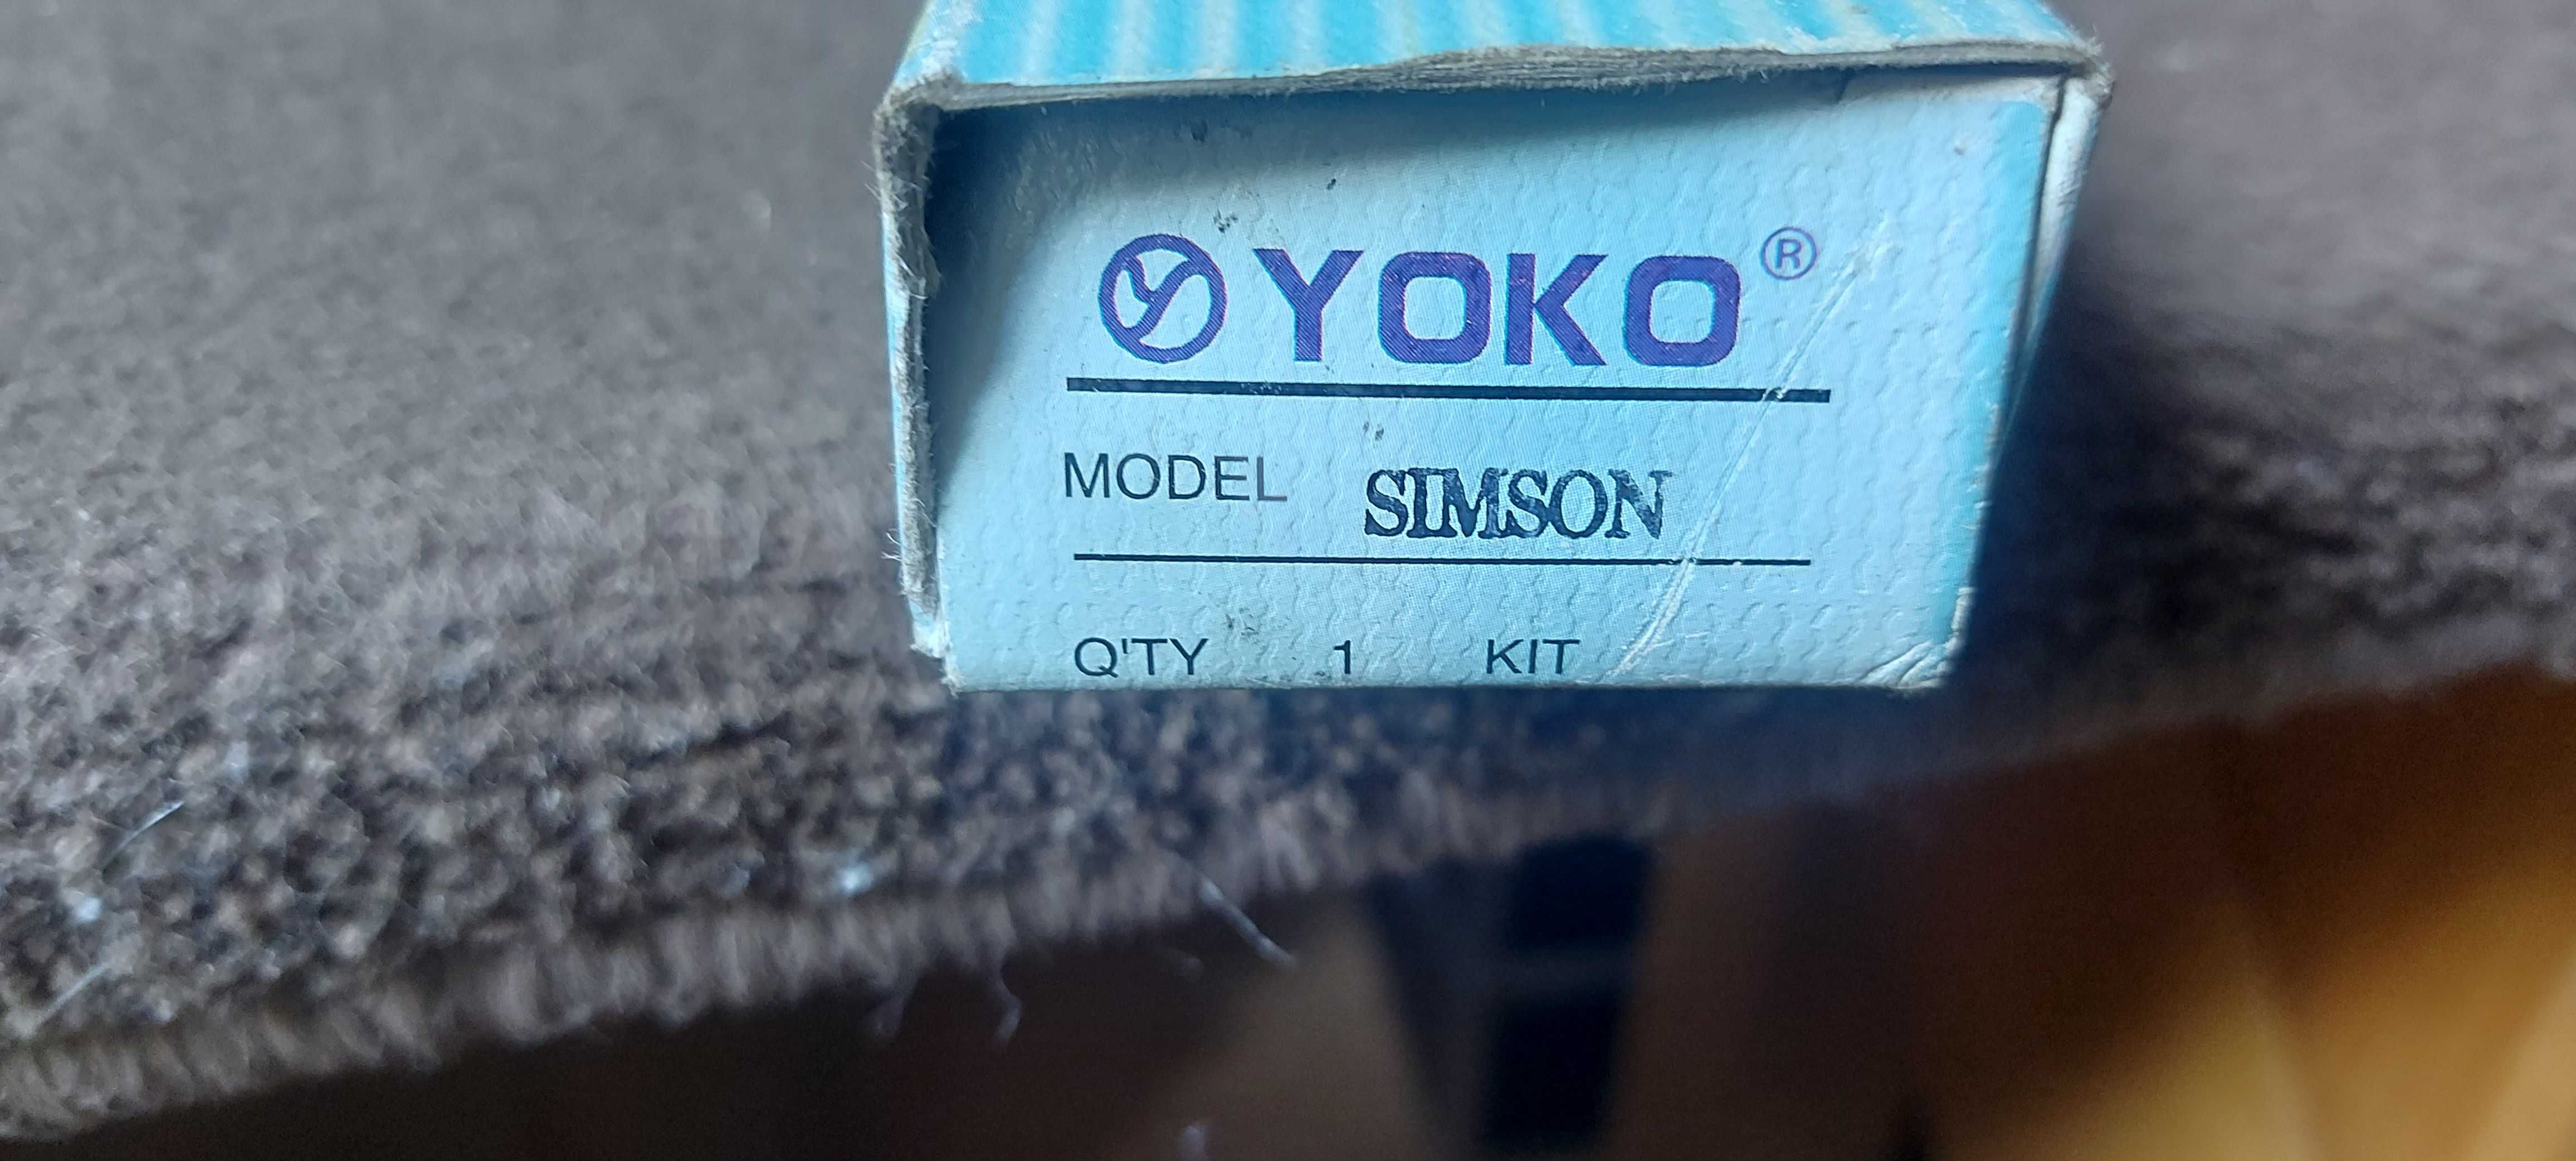 Korbowód Yoko Simson S51 nowy komplet